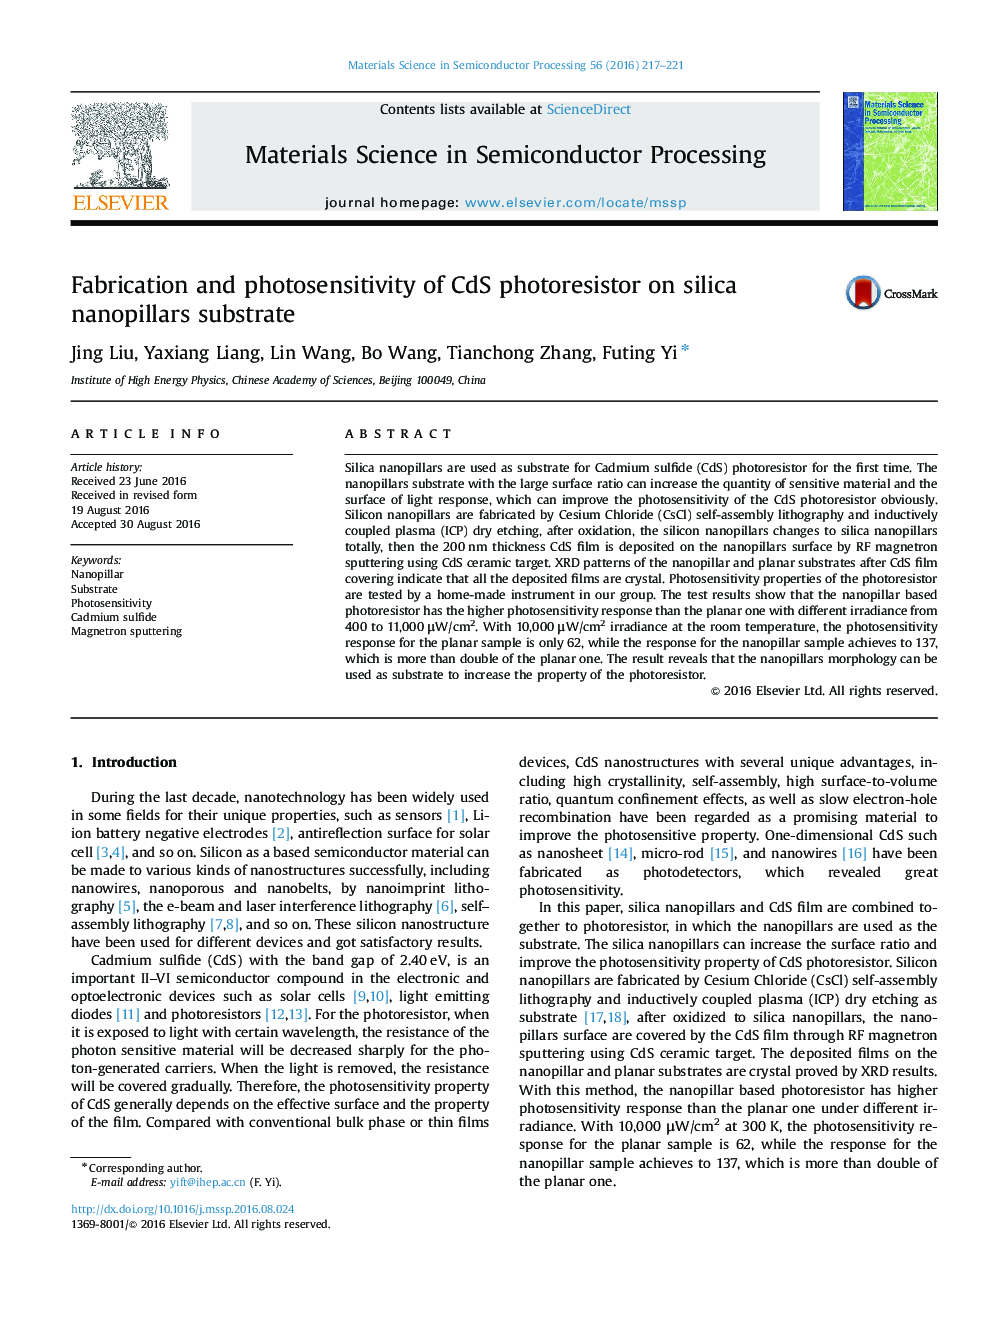 Fabrication and photosensitivity of CdS photoresistor on silica nanopillars substrate